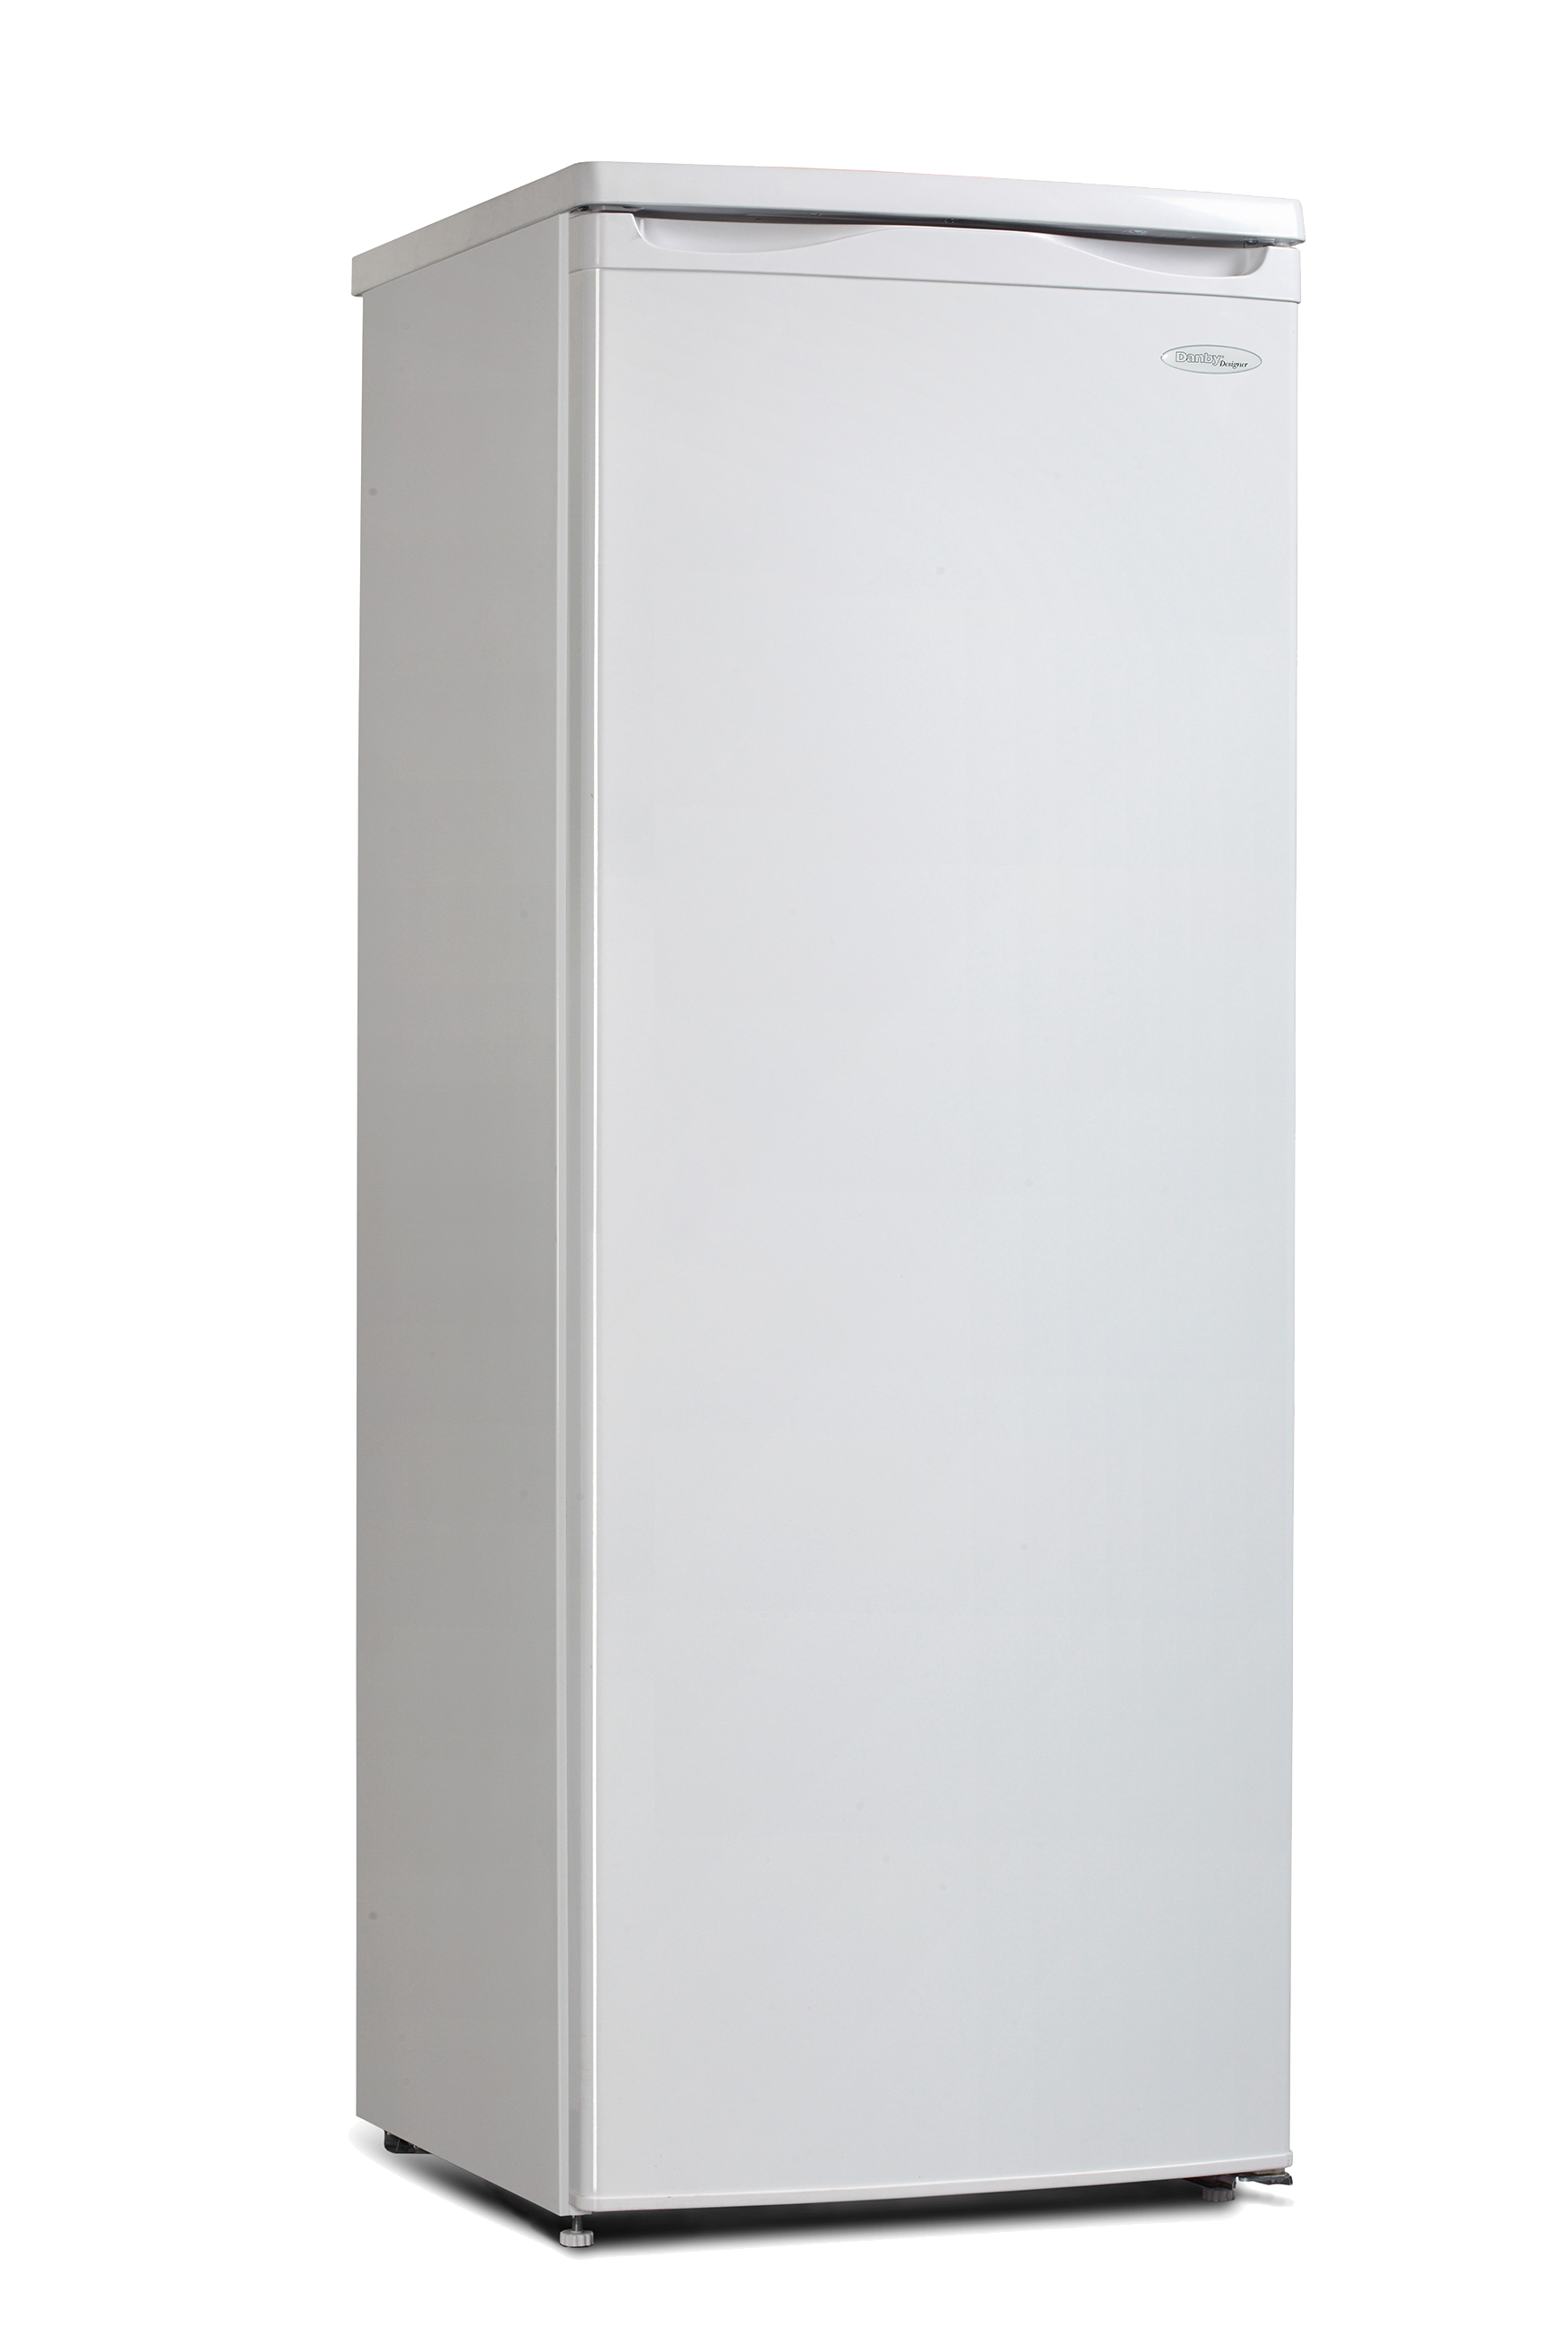 100 Danby pact Refrigerator Freezer Breaking Bland pact